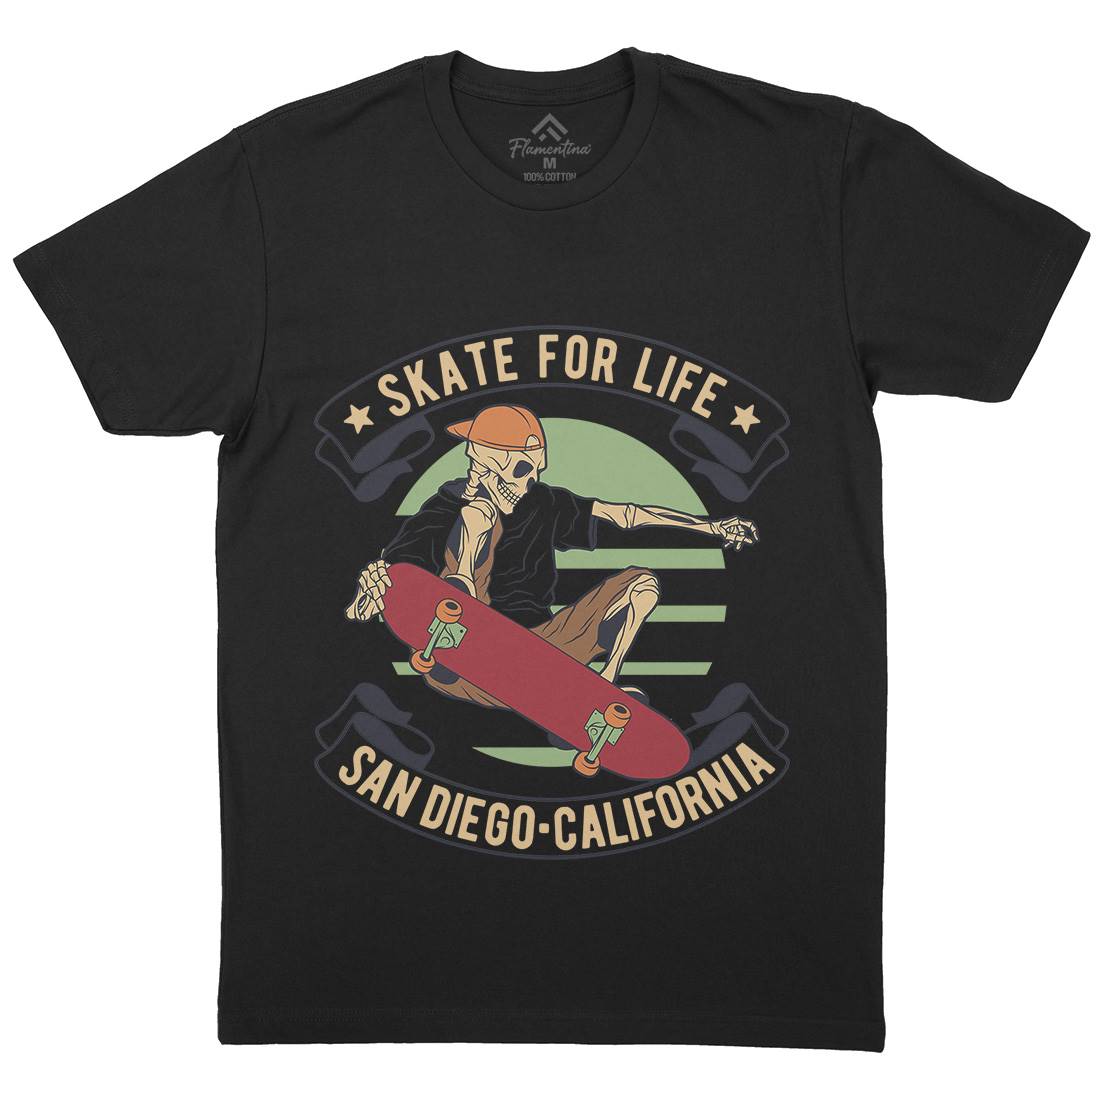 For Life Mens Organic Crew Neck T-Shirt Skate D970